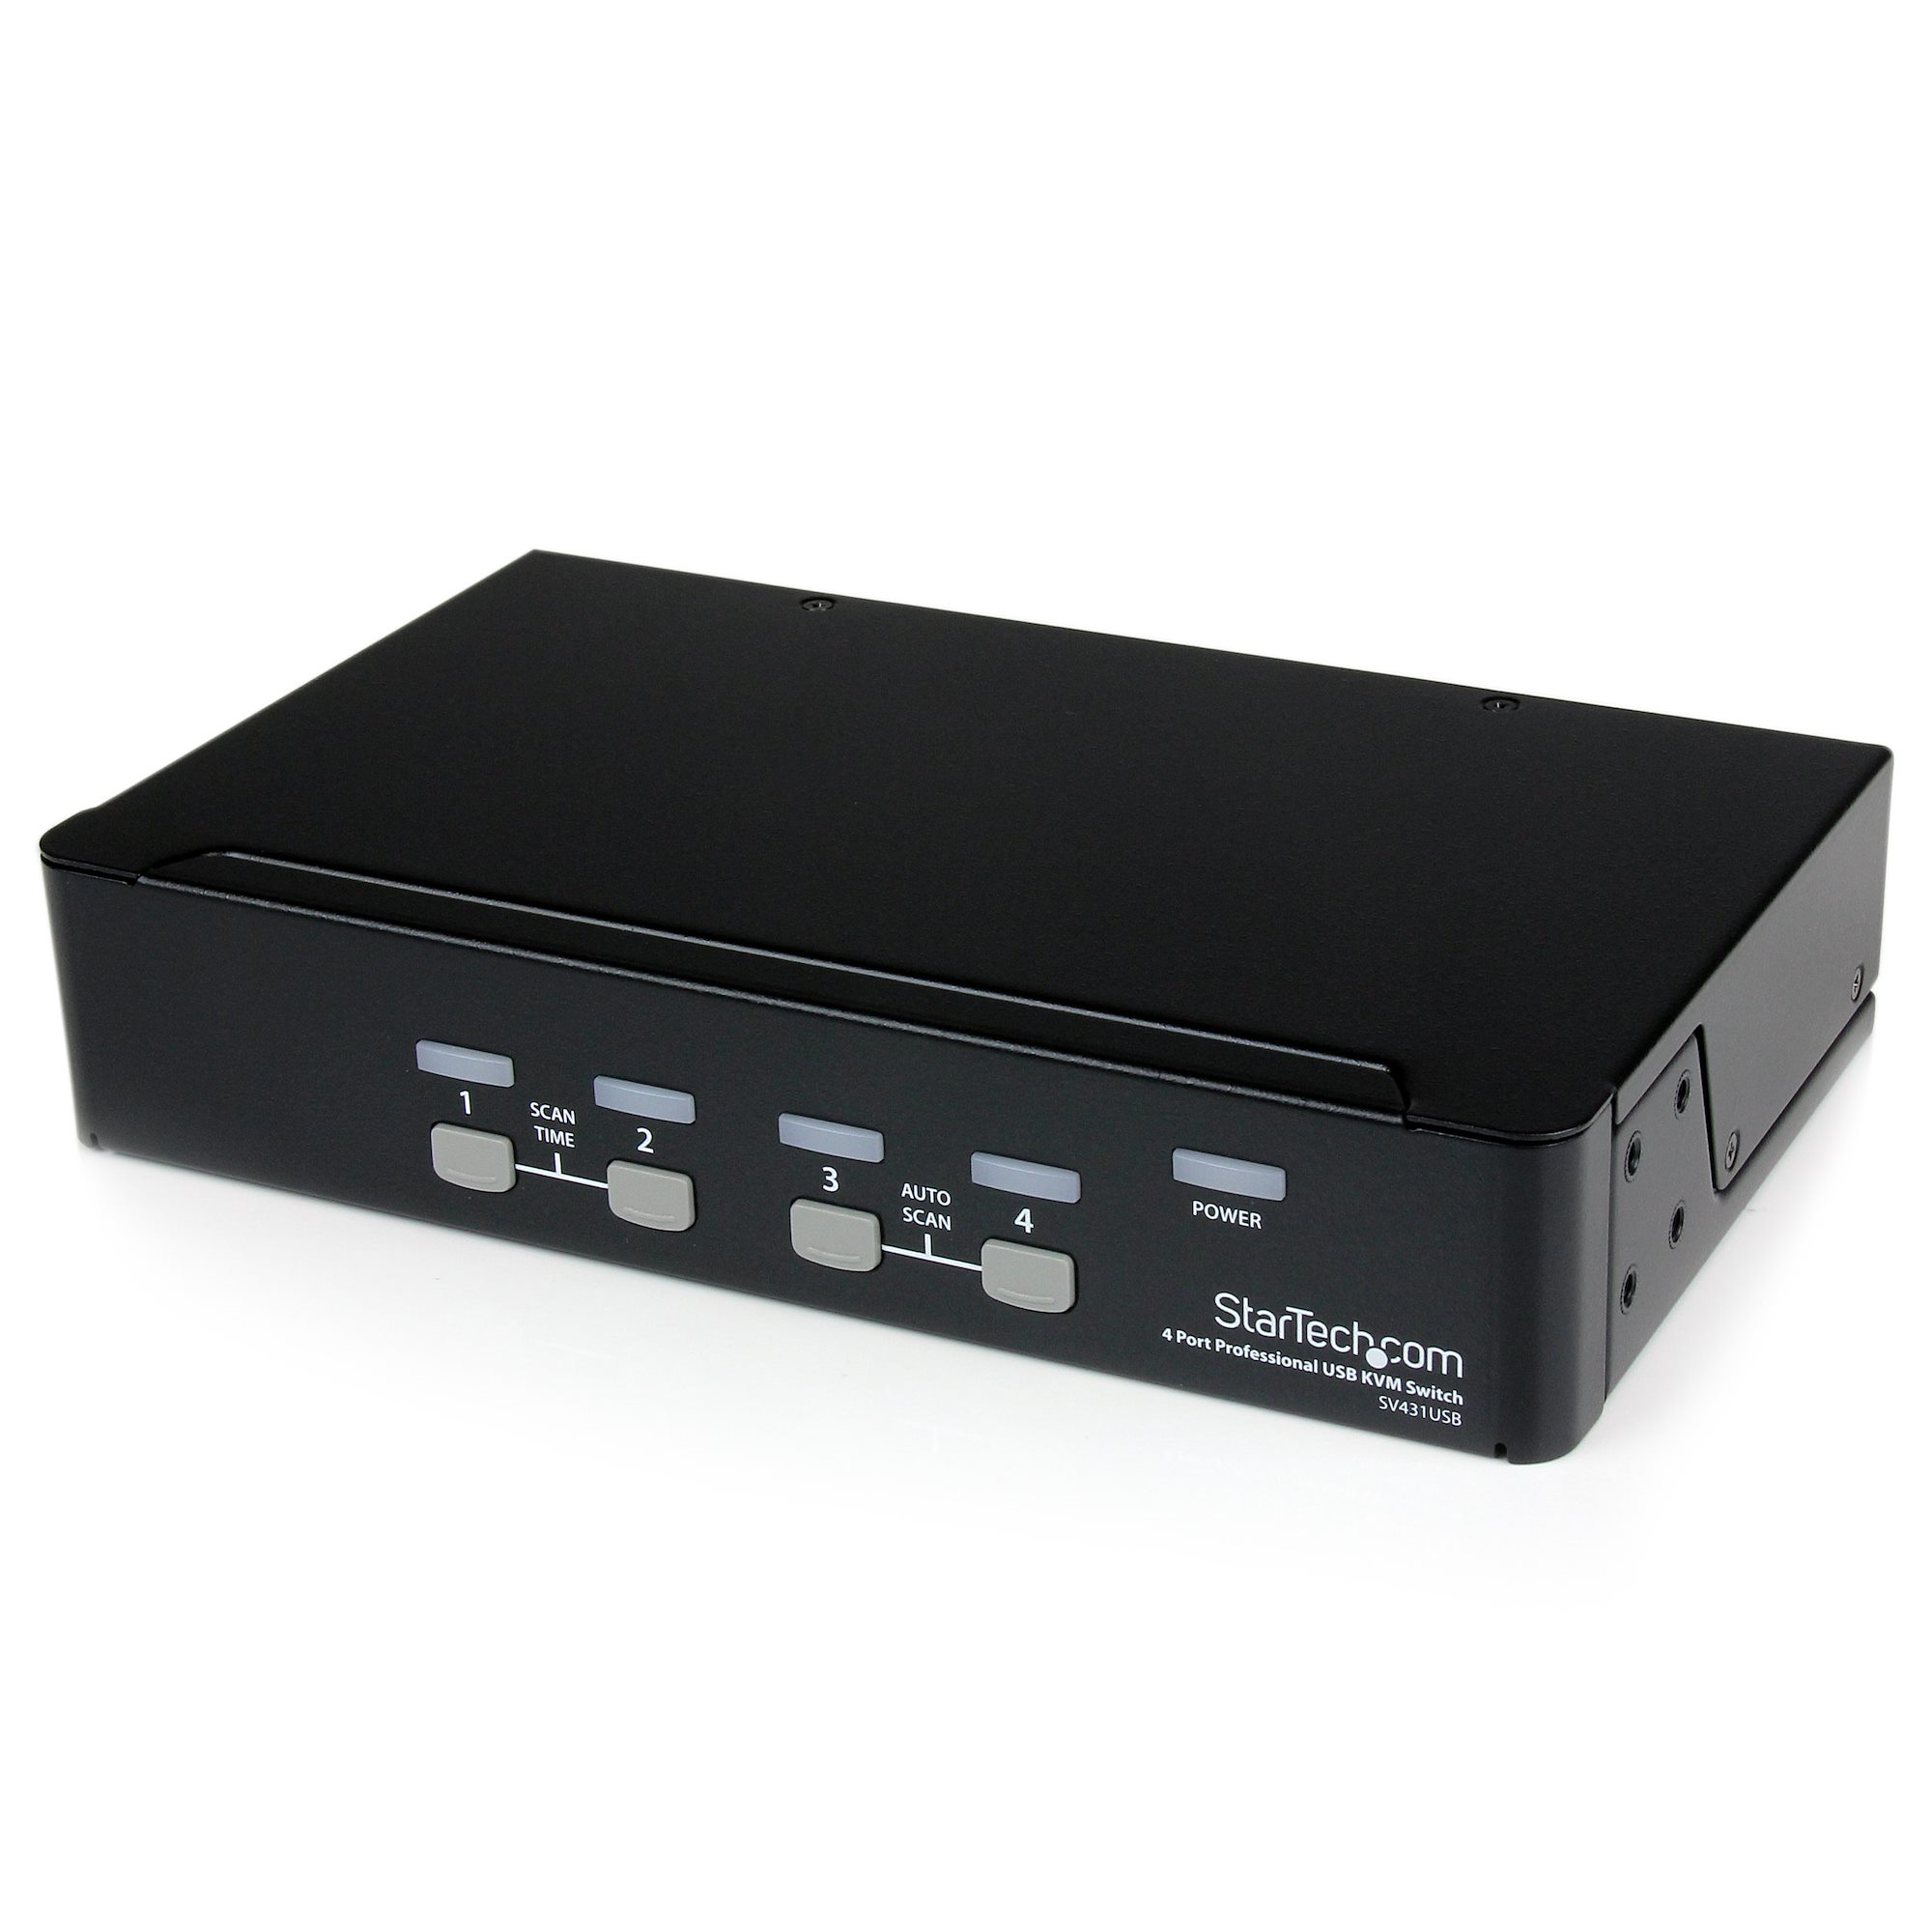 4 Port Professional VGA USB KVM Switch with Hub